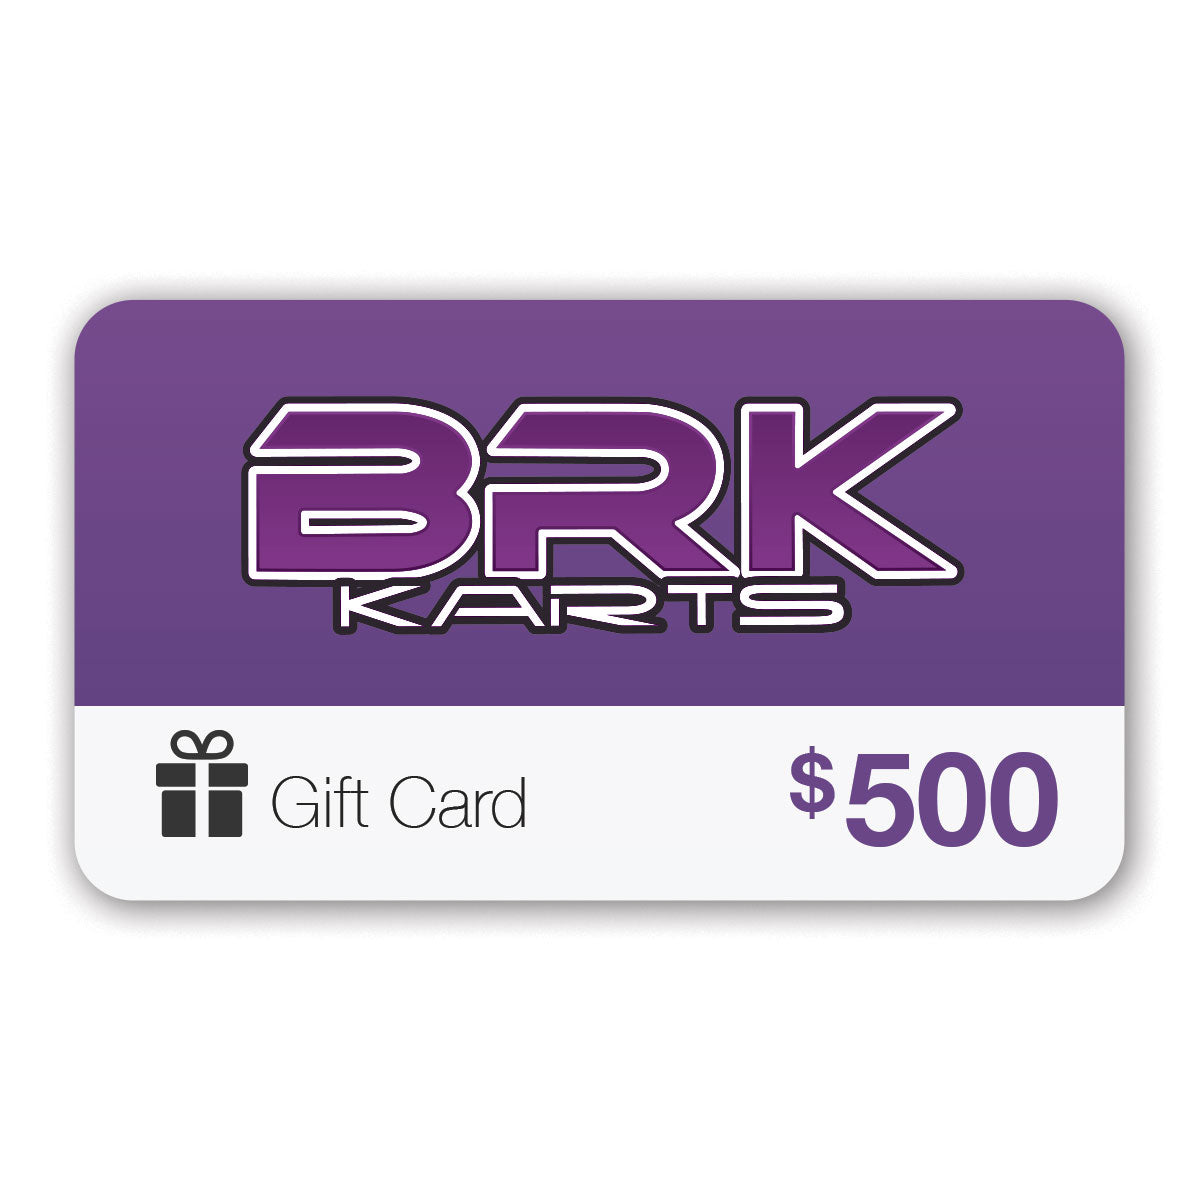 BRK Karts Gift Card 500